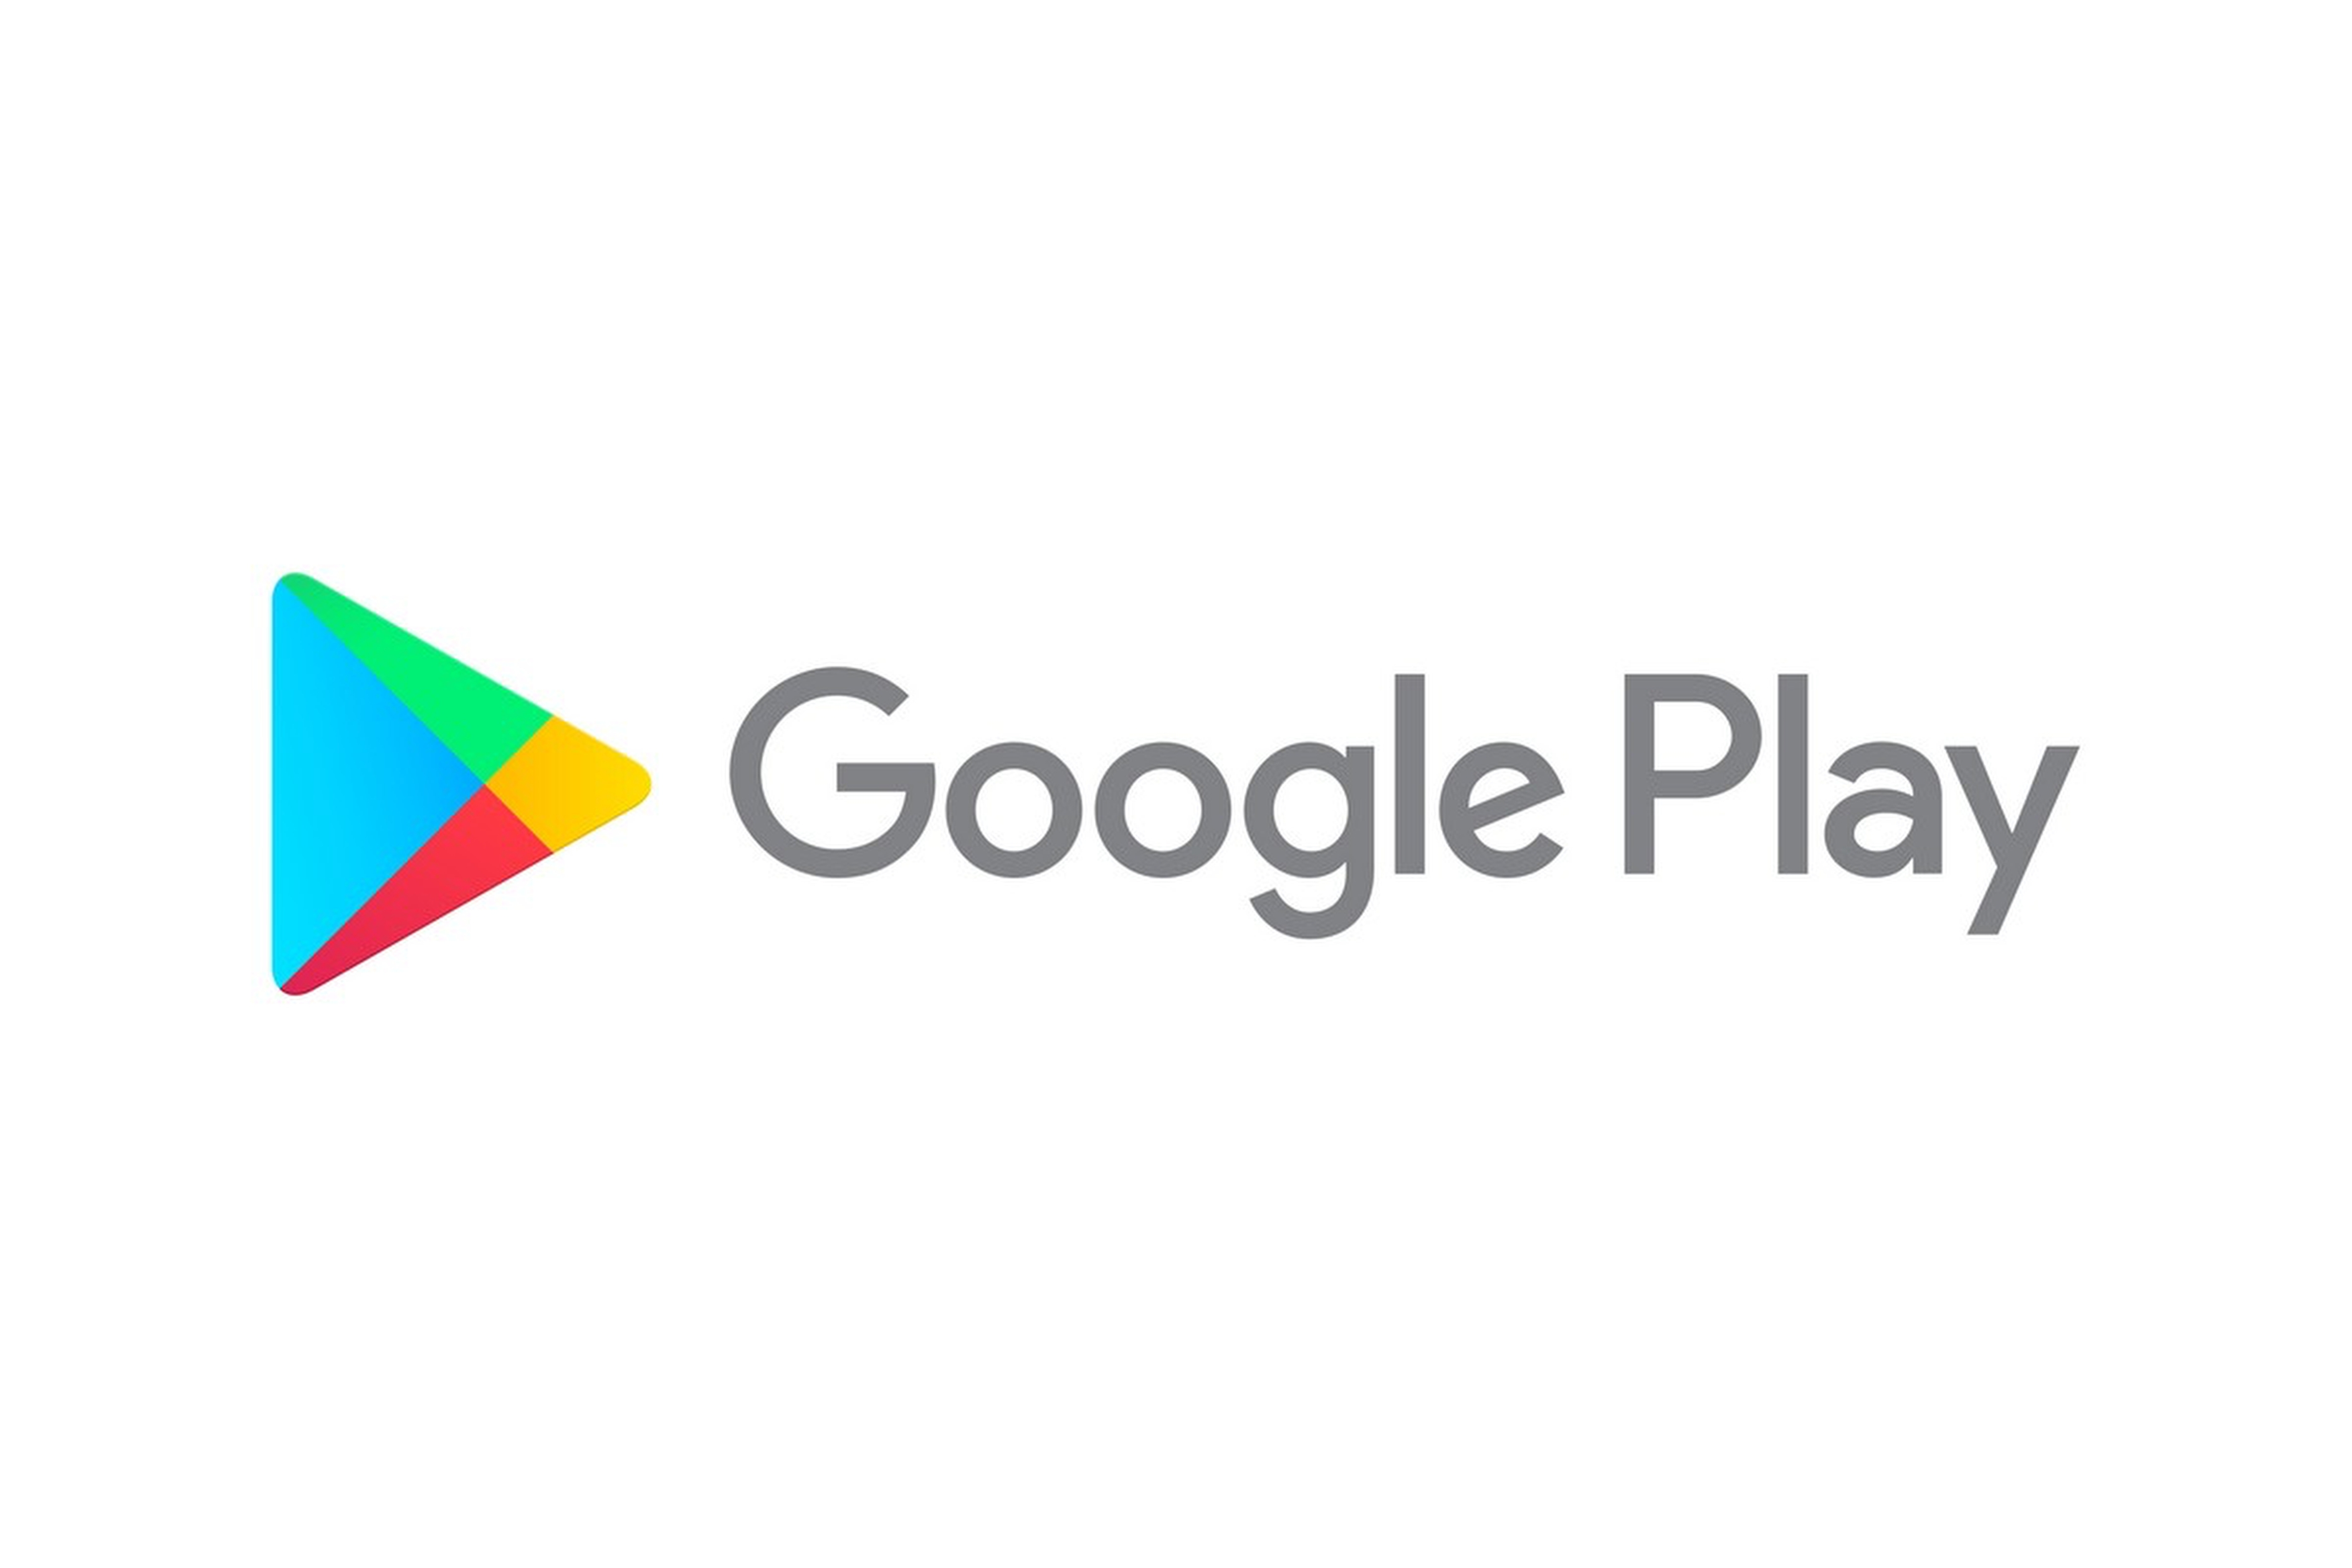 Перейти в google play. Гугл плей. Логотип Google Play. Google Play игры. App Store Google Play.